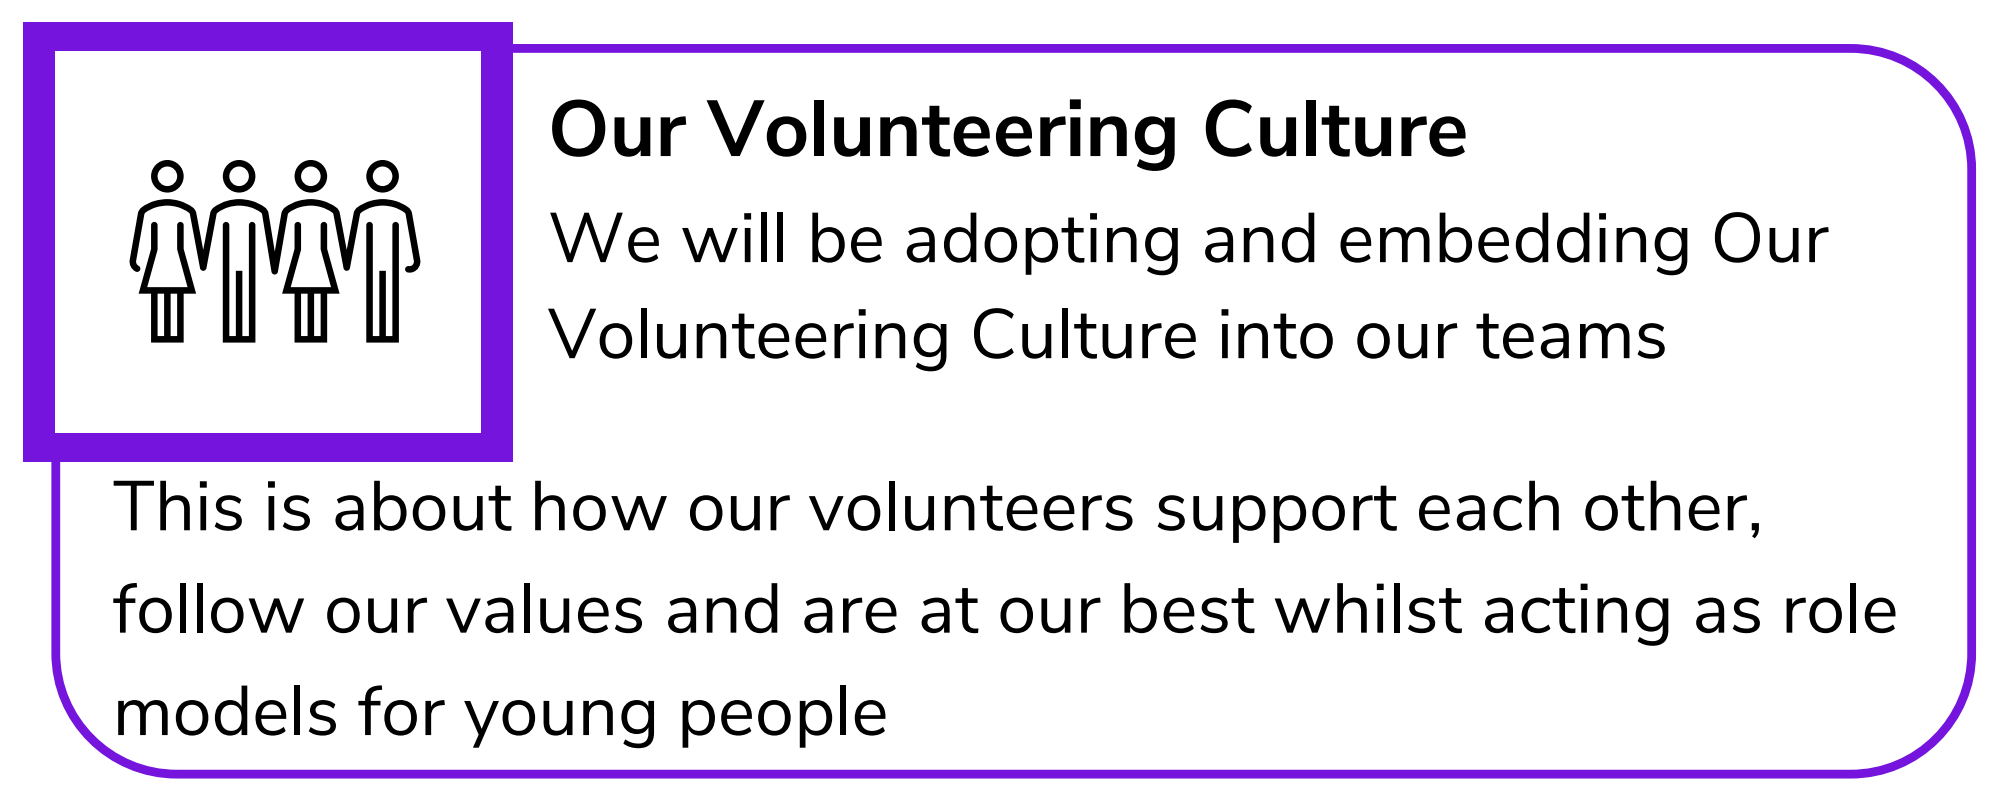 Our volunteering culture